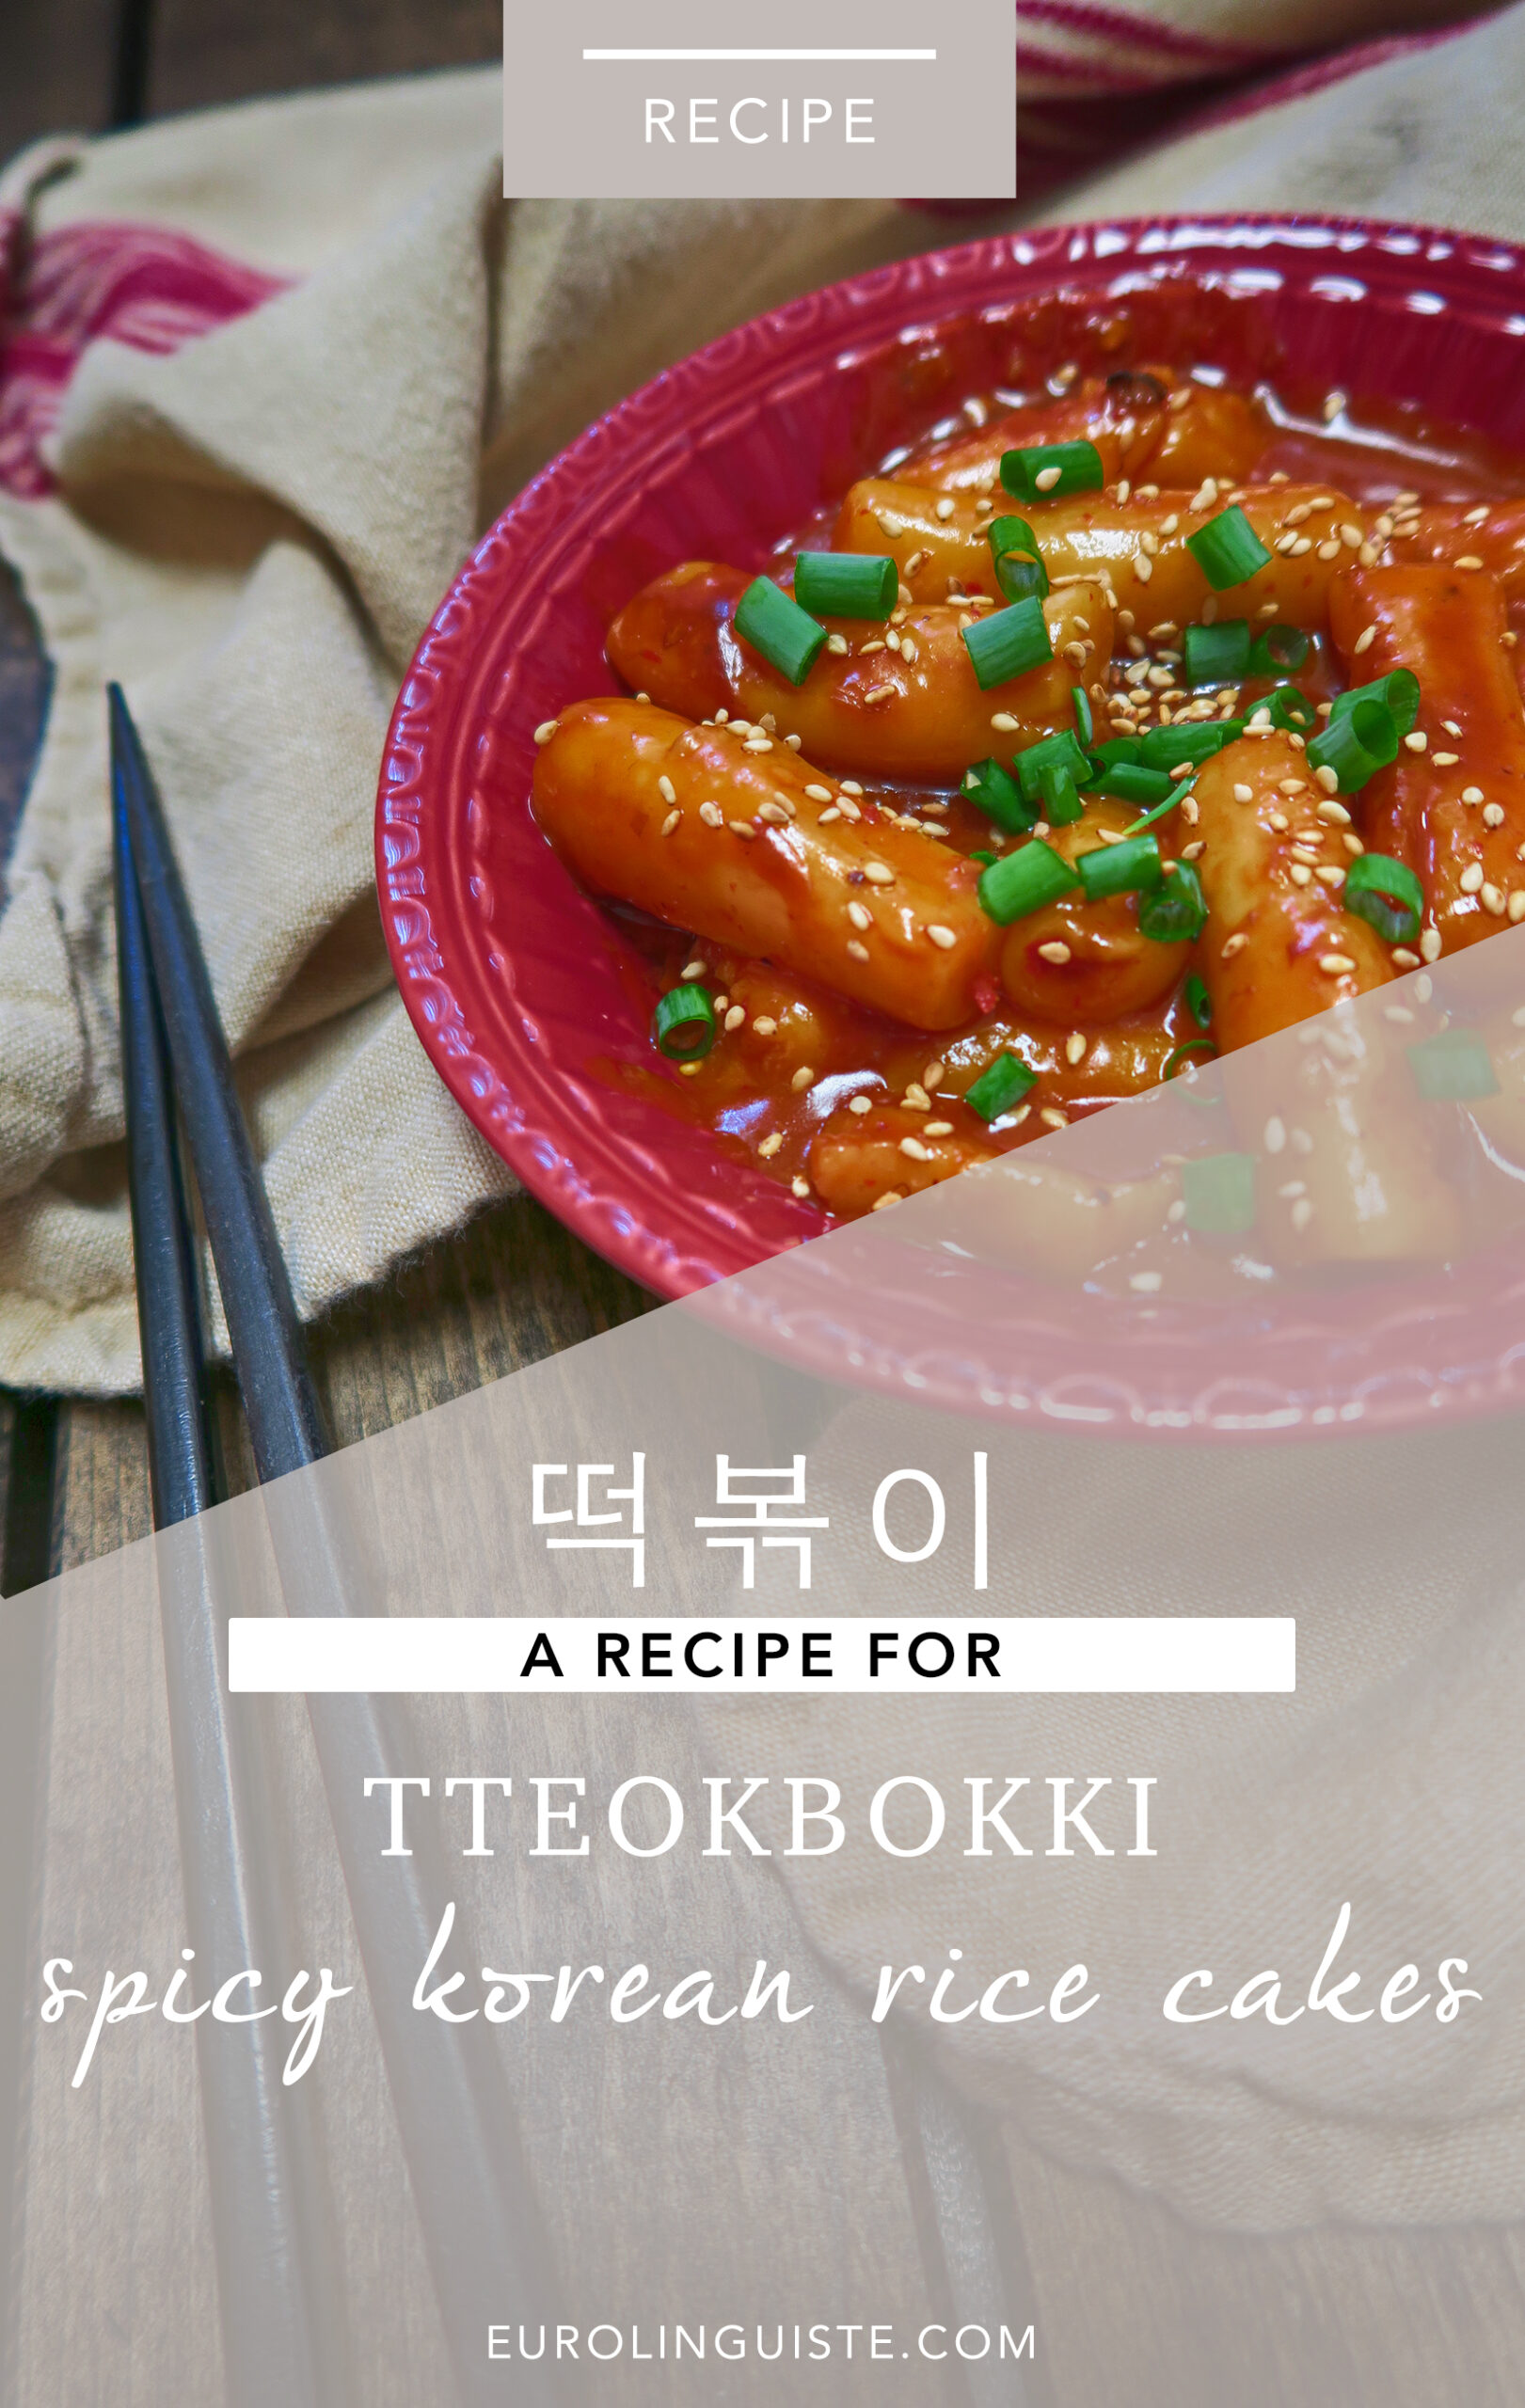 Classic Tteokbokki: 20-Minute Korean Spicy Rice Cakes - Beyond Kimchee